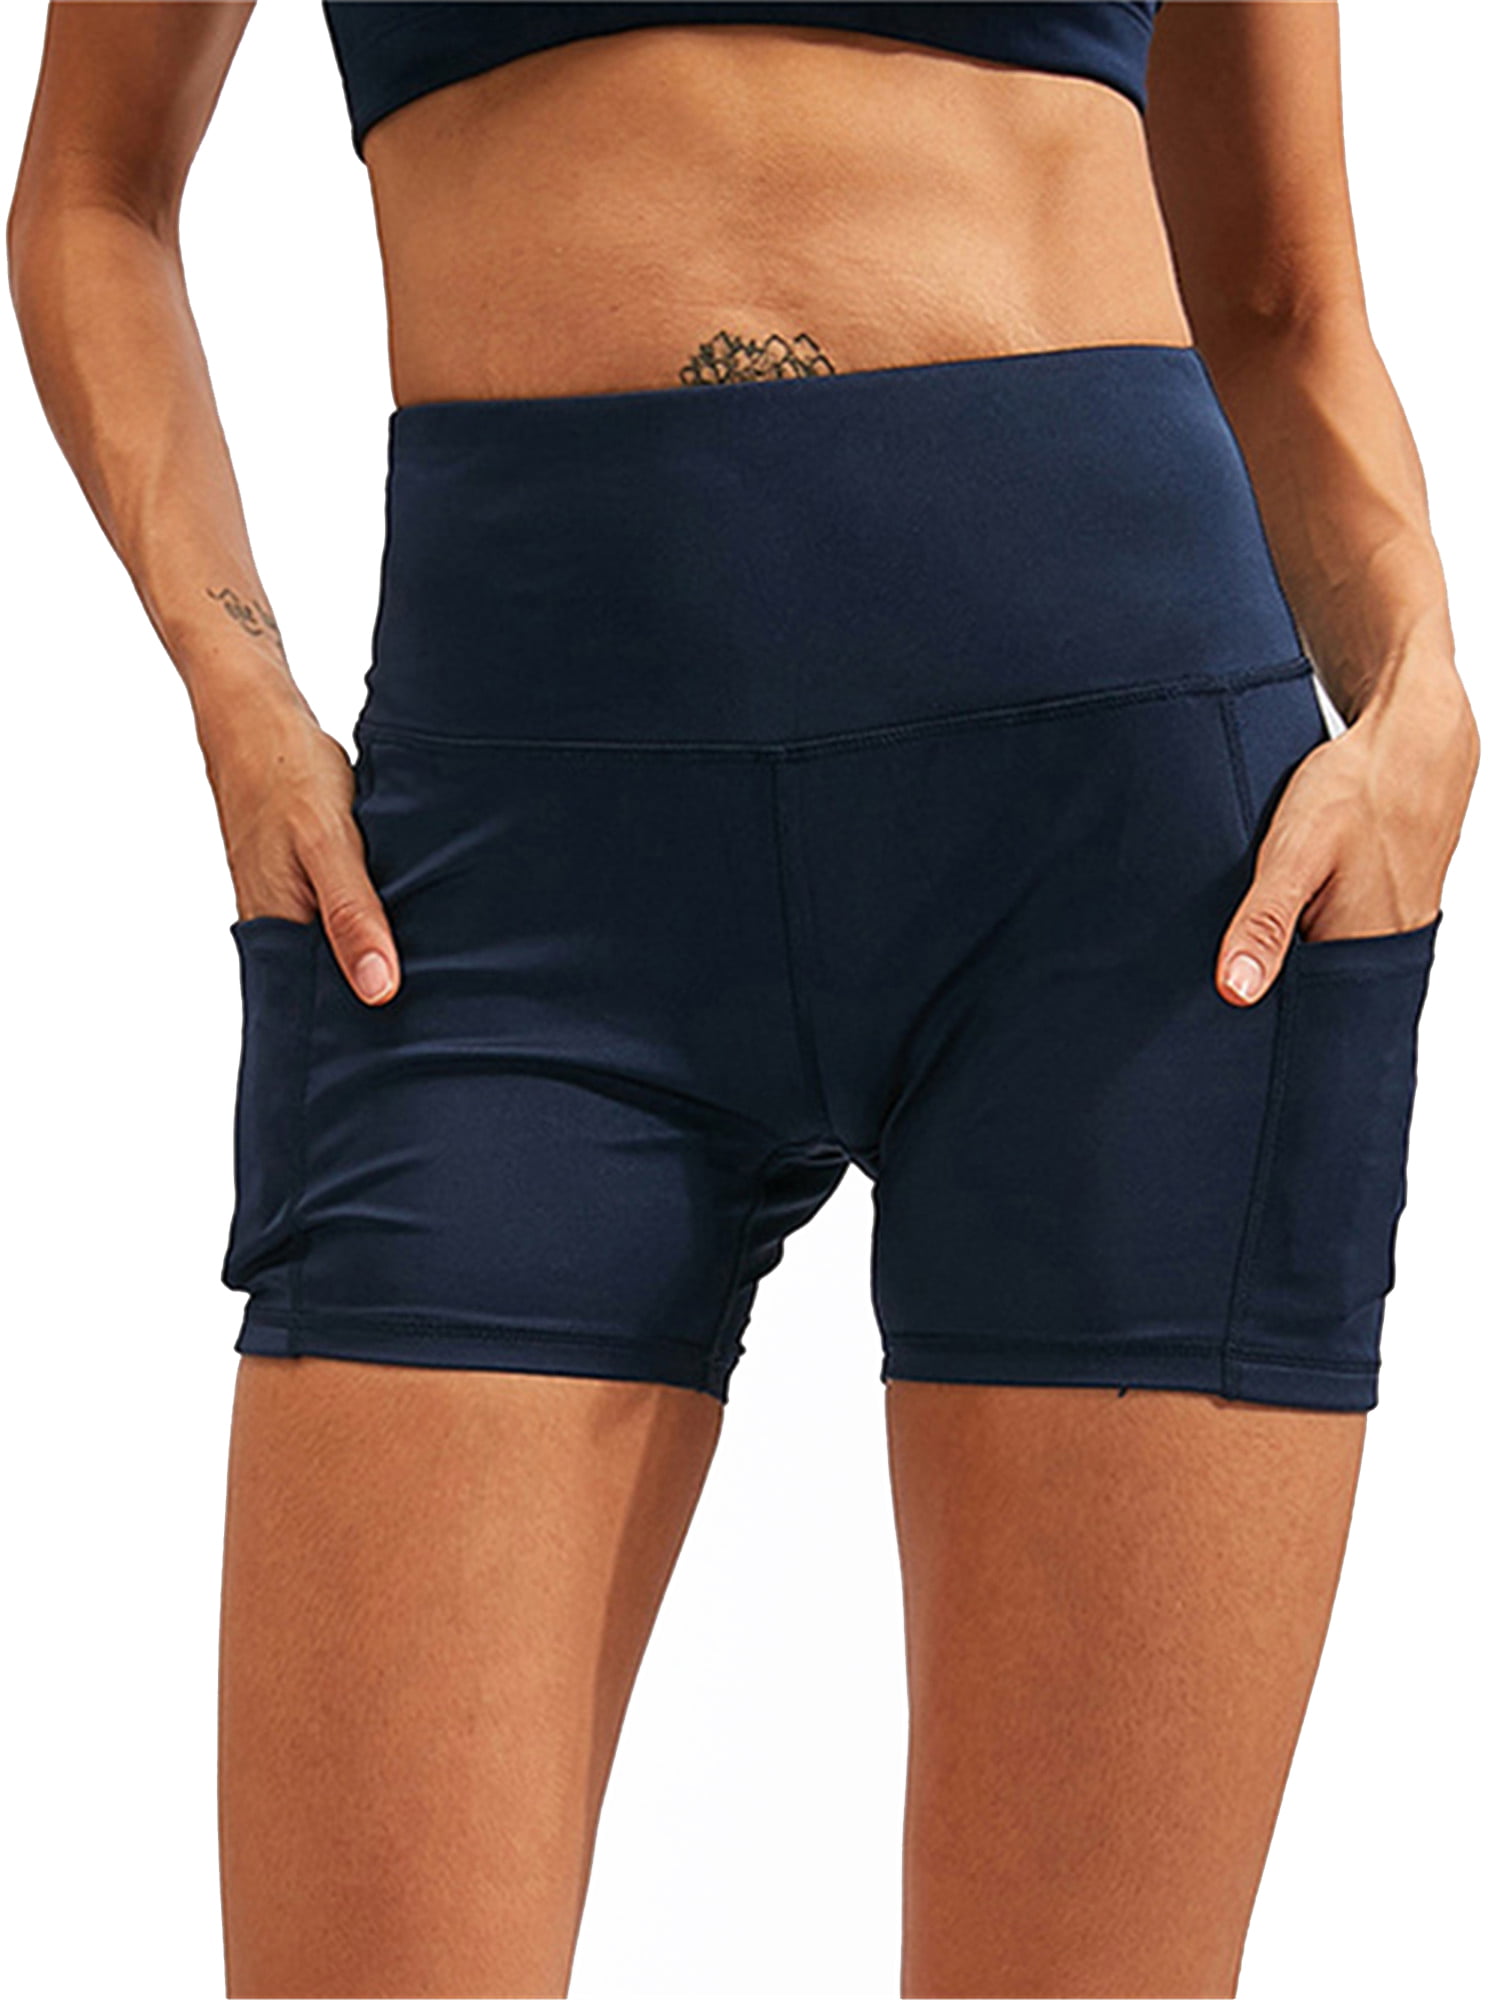 aunavey-aunavey-women-s-compression-shorts-yoga-sports-side-pockets